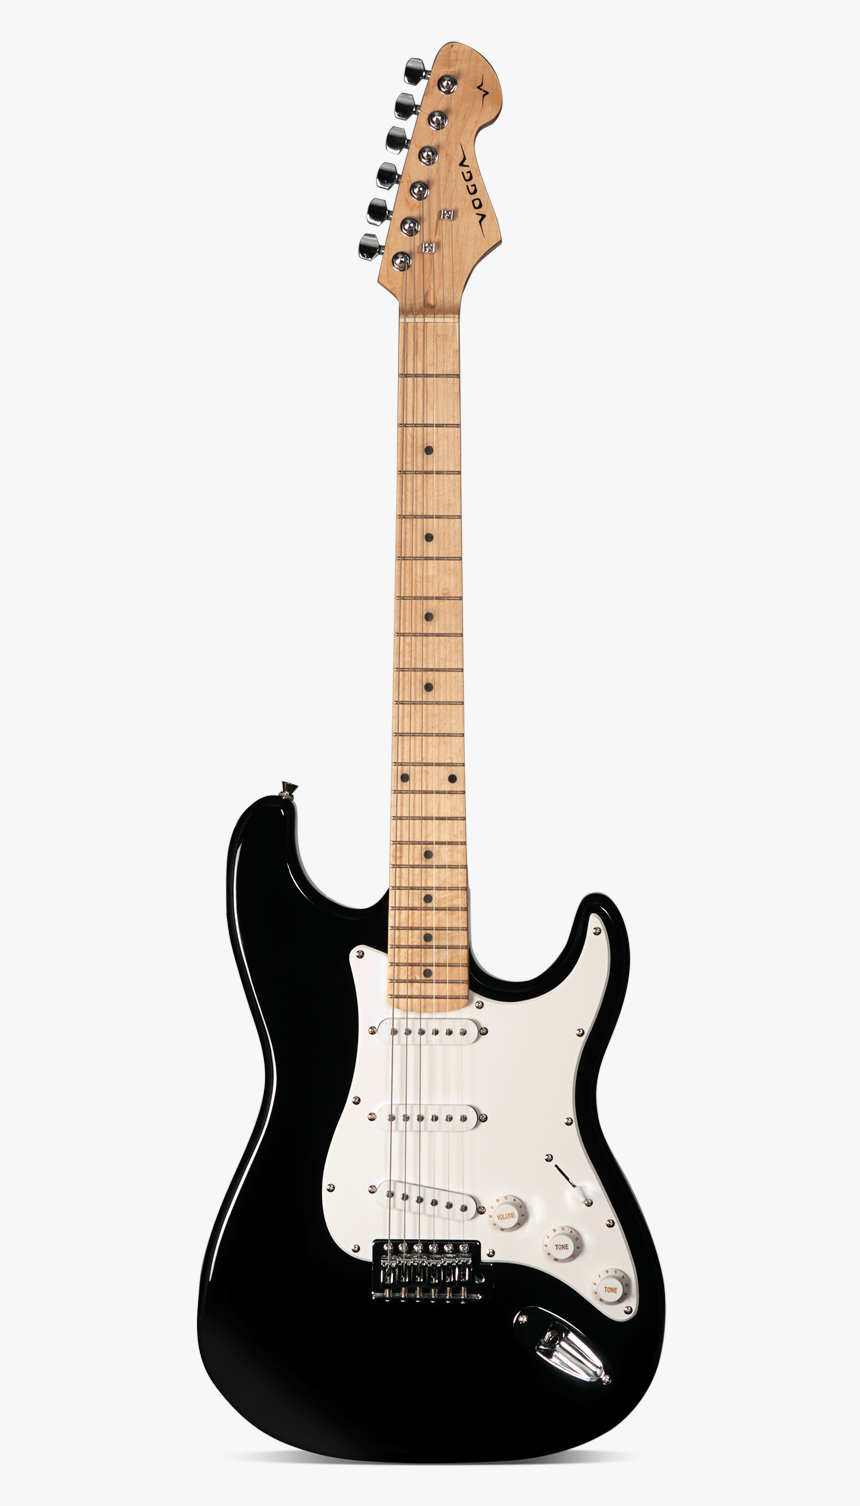 Fender Stratocaster Fender Squier Affinity Stratocaster, HD Png Download, Free Download